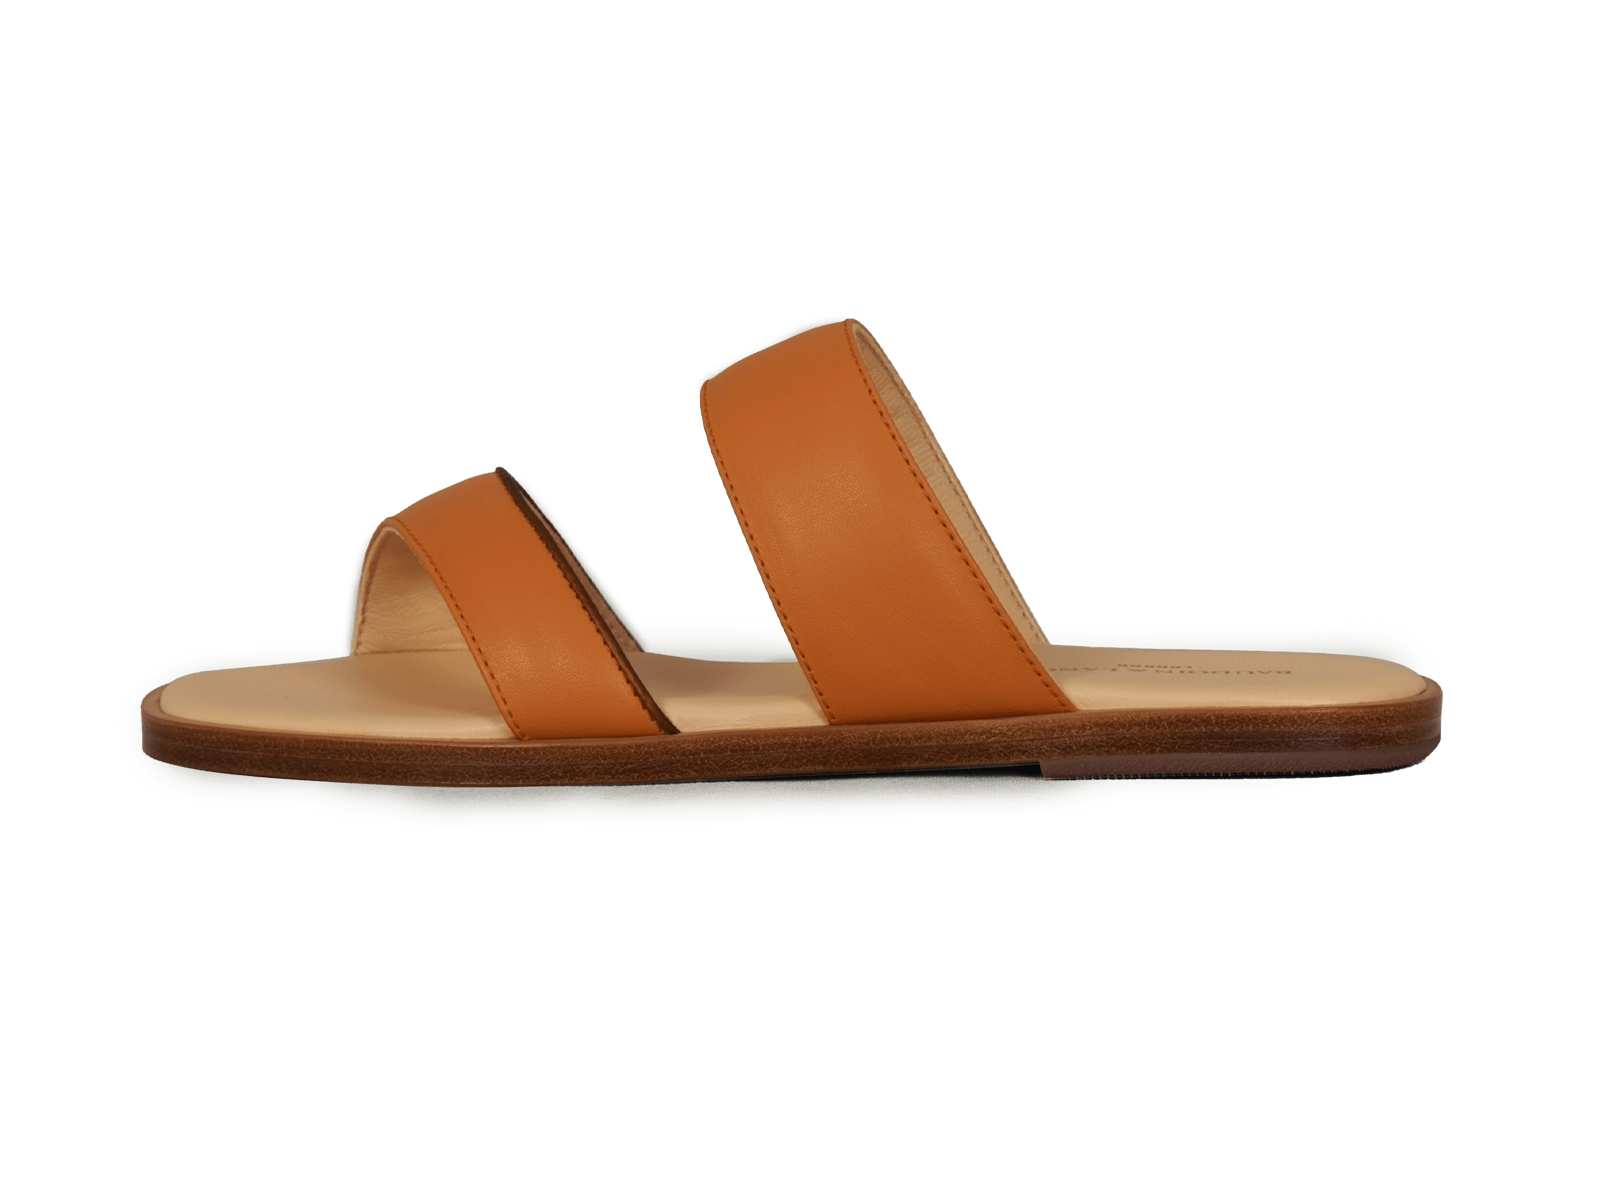 Plume Sandal in Orange Matt Calf and Copper Translucent Kidskin